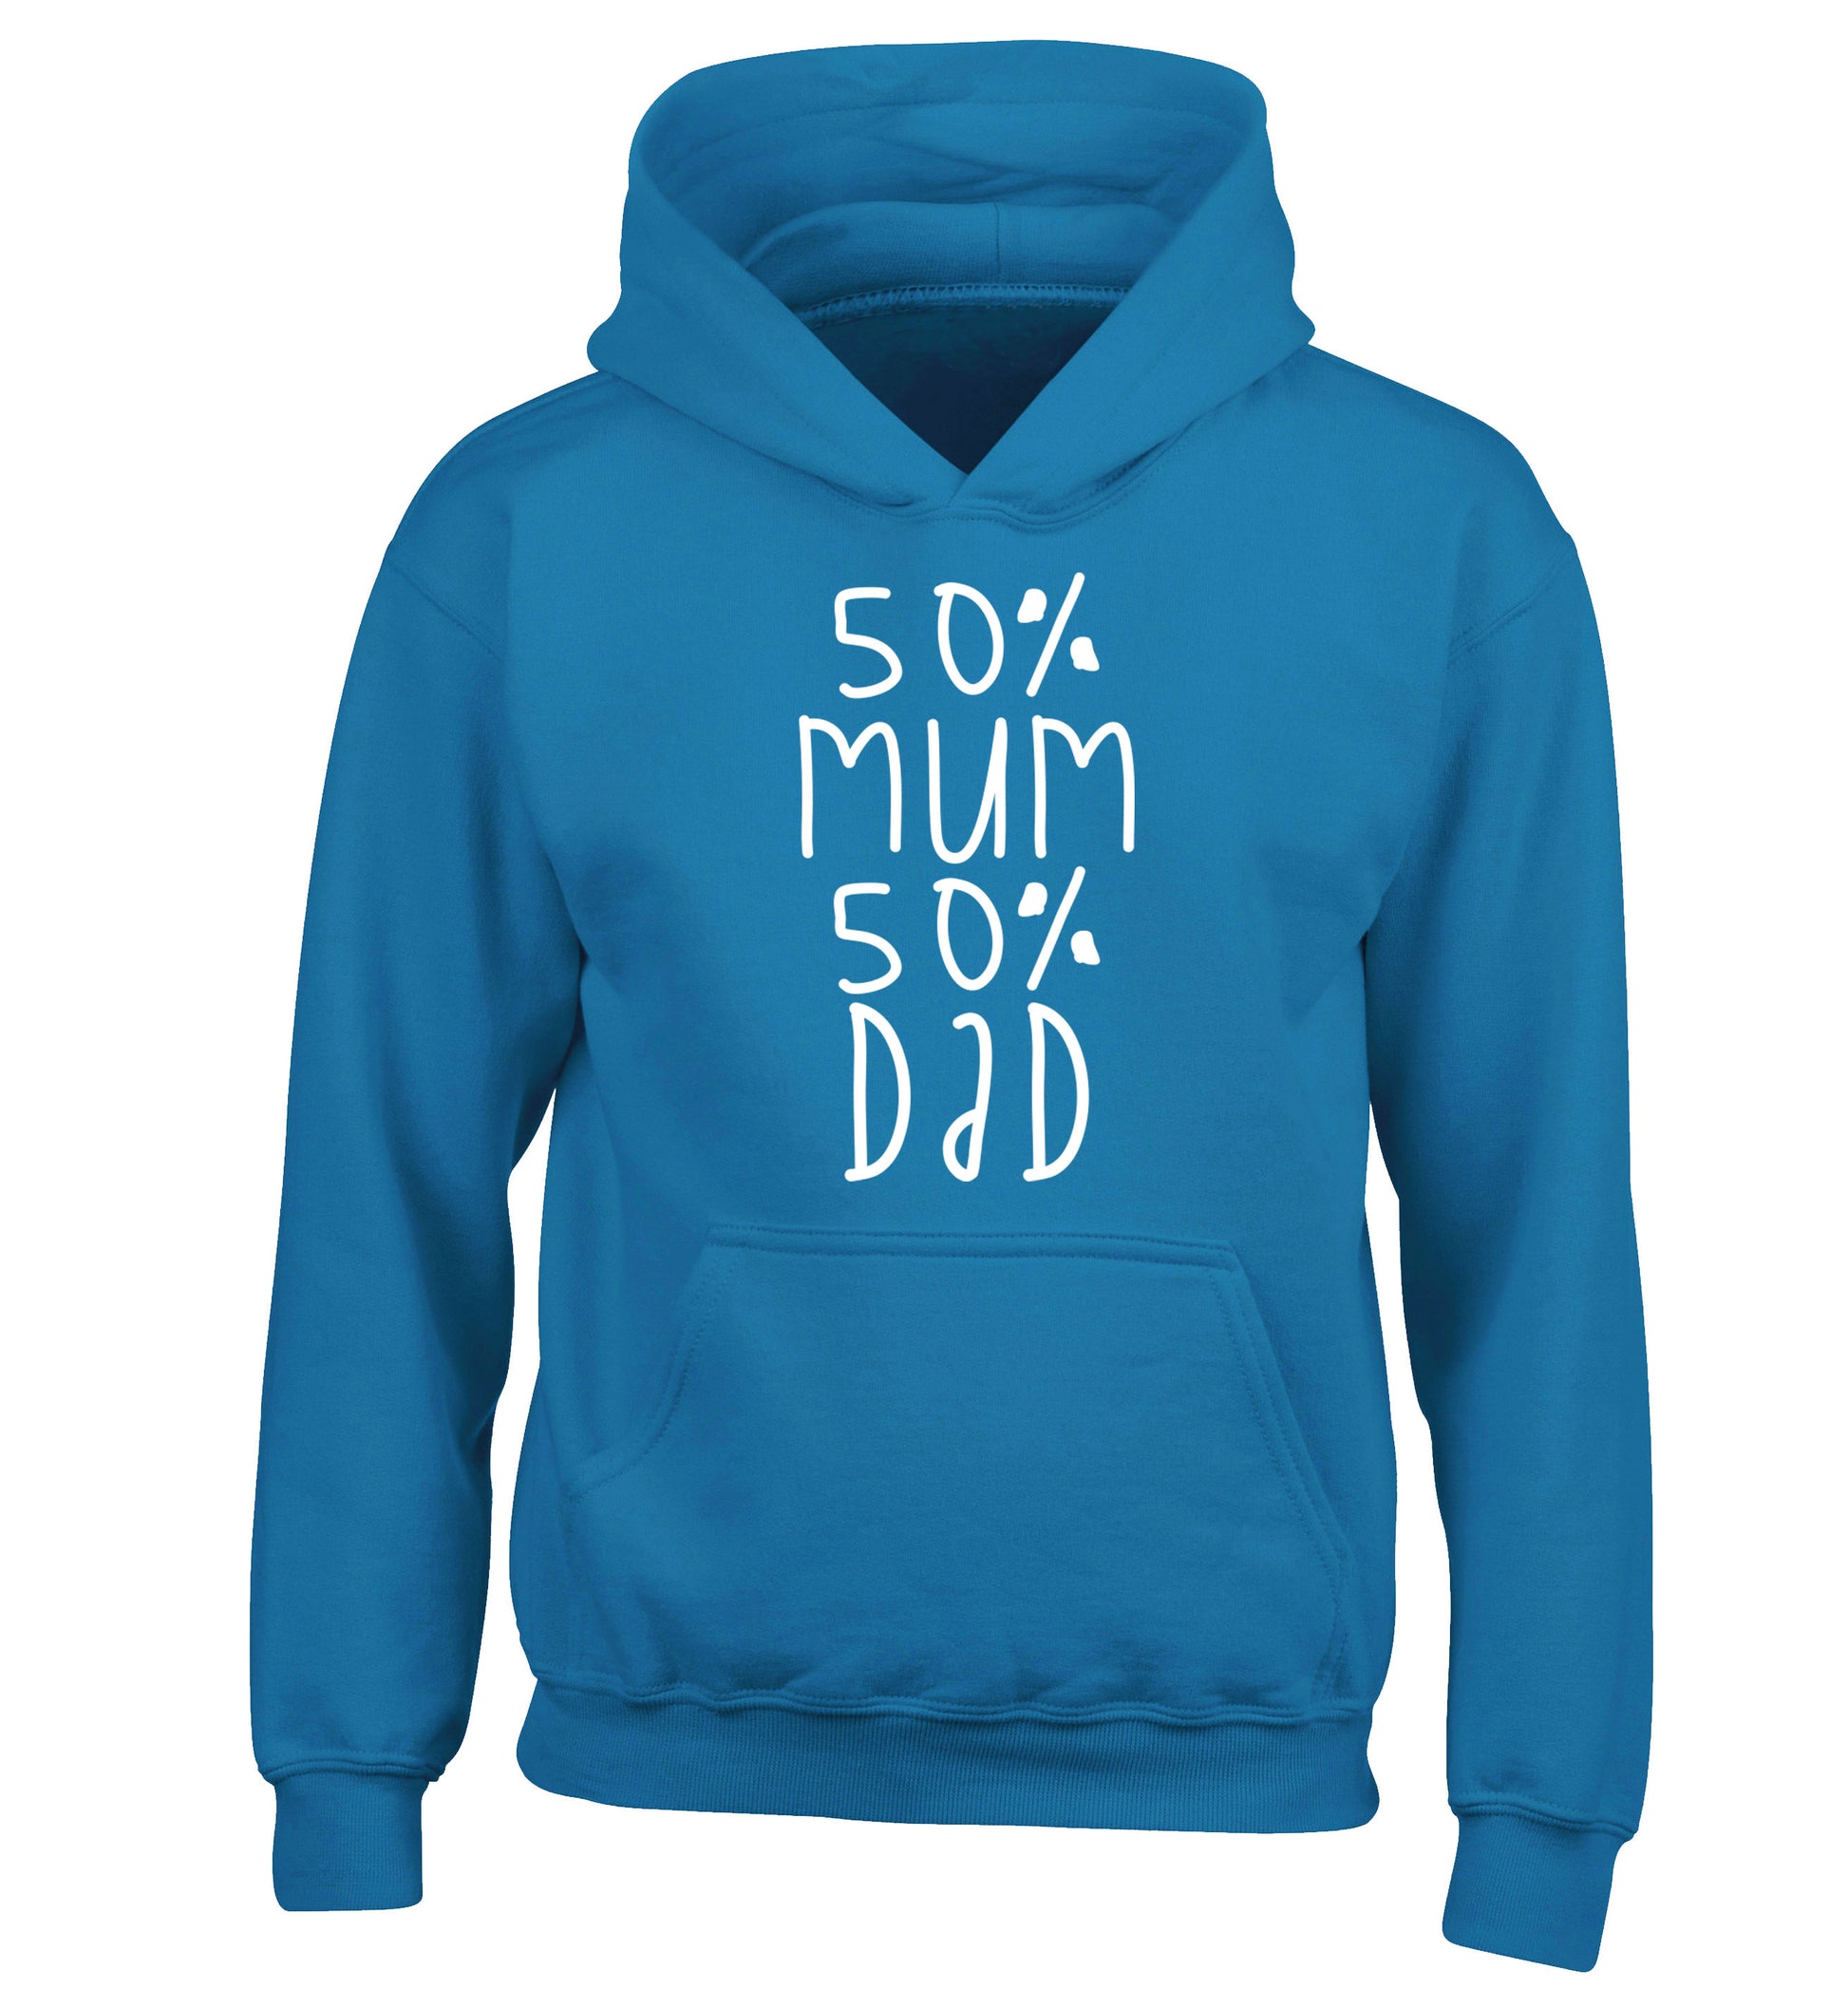 50% mum 50% dad children's blue hoodie 12-14 Years